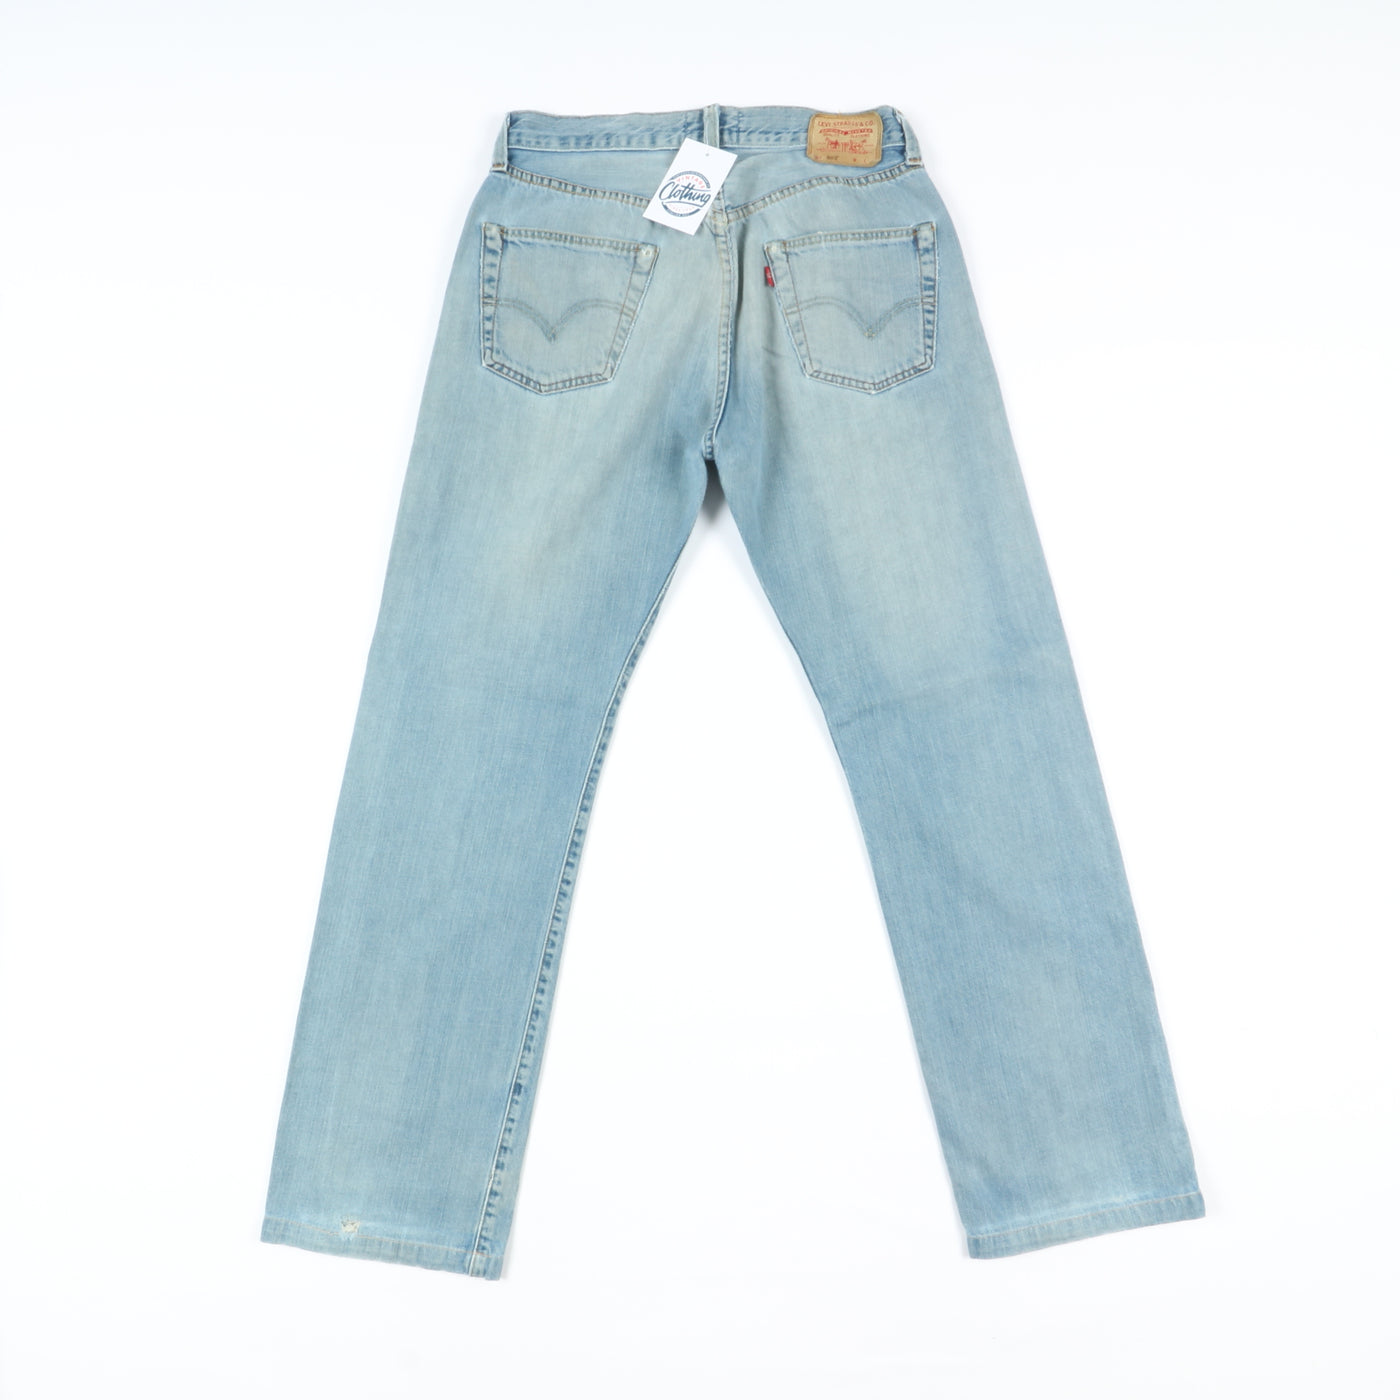 Levi's 501 Rivets 1947 Jeans Vintage Denim W33 L36 Unisex Vita Alta Limited Edition